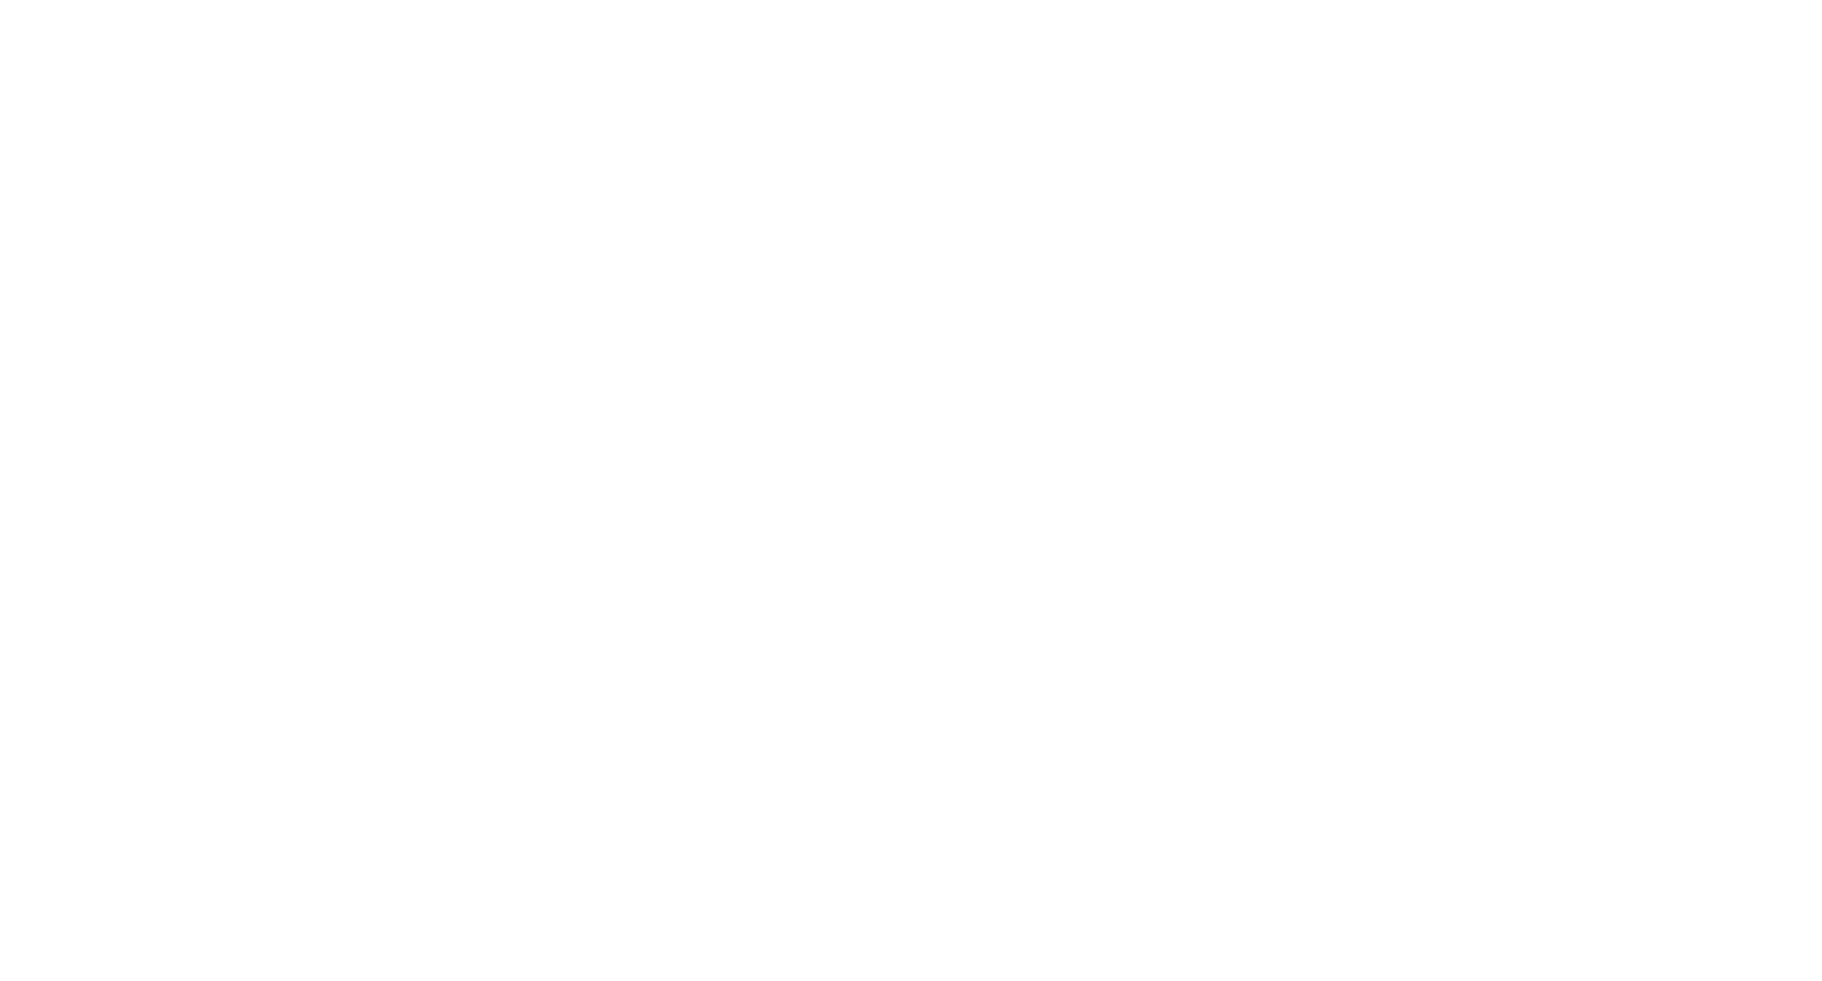 Infinity Forwarding